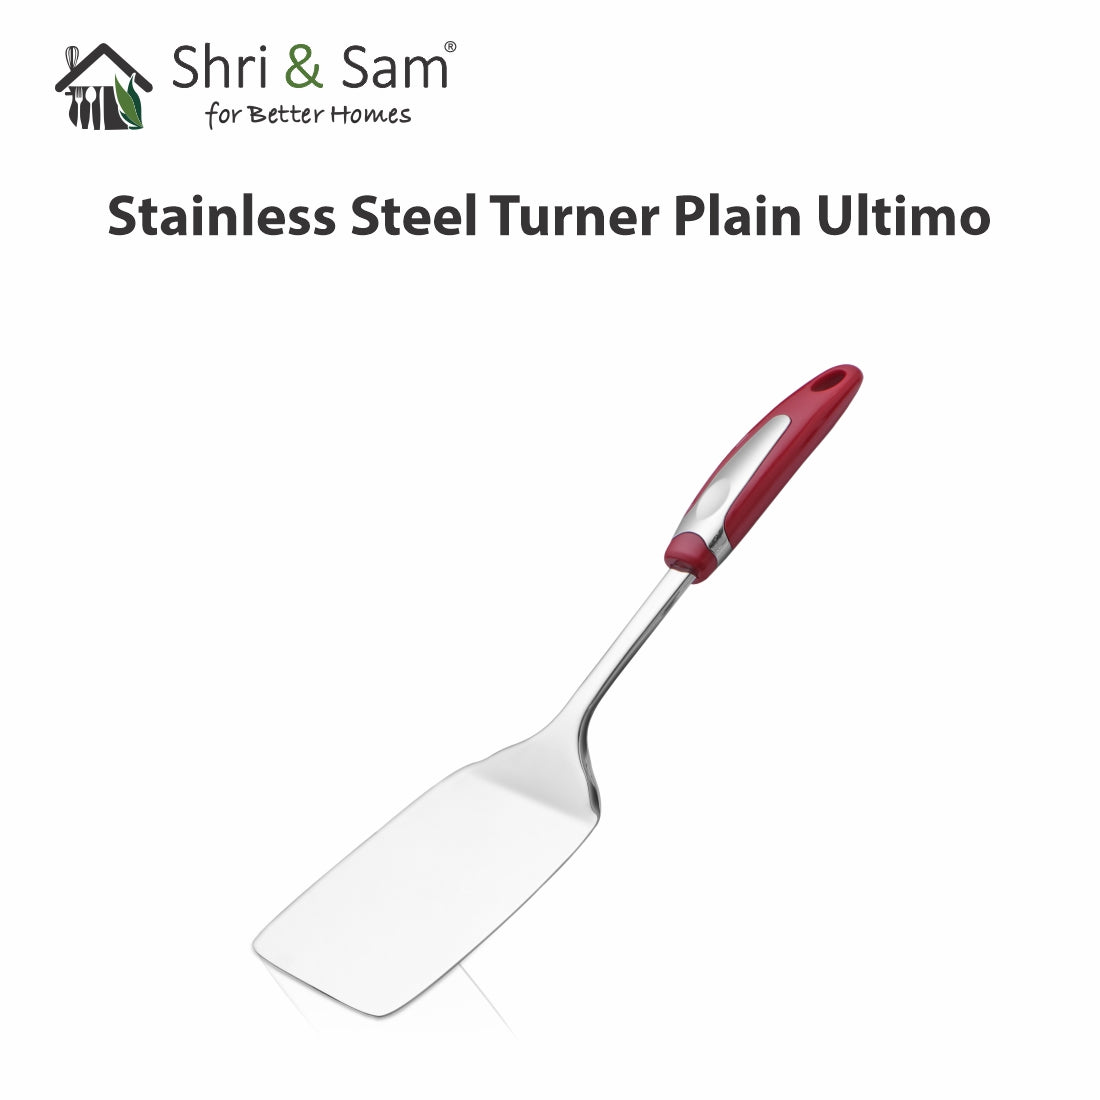 Stainless Steel Turner Plain Ultimo